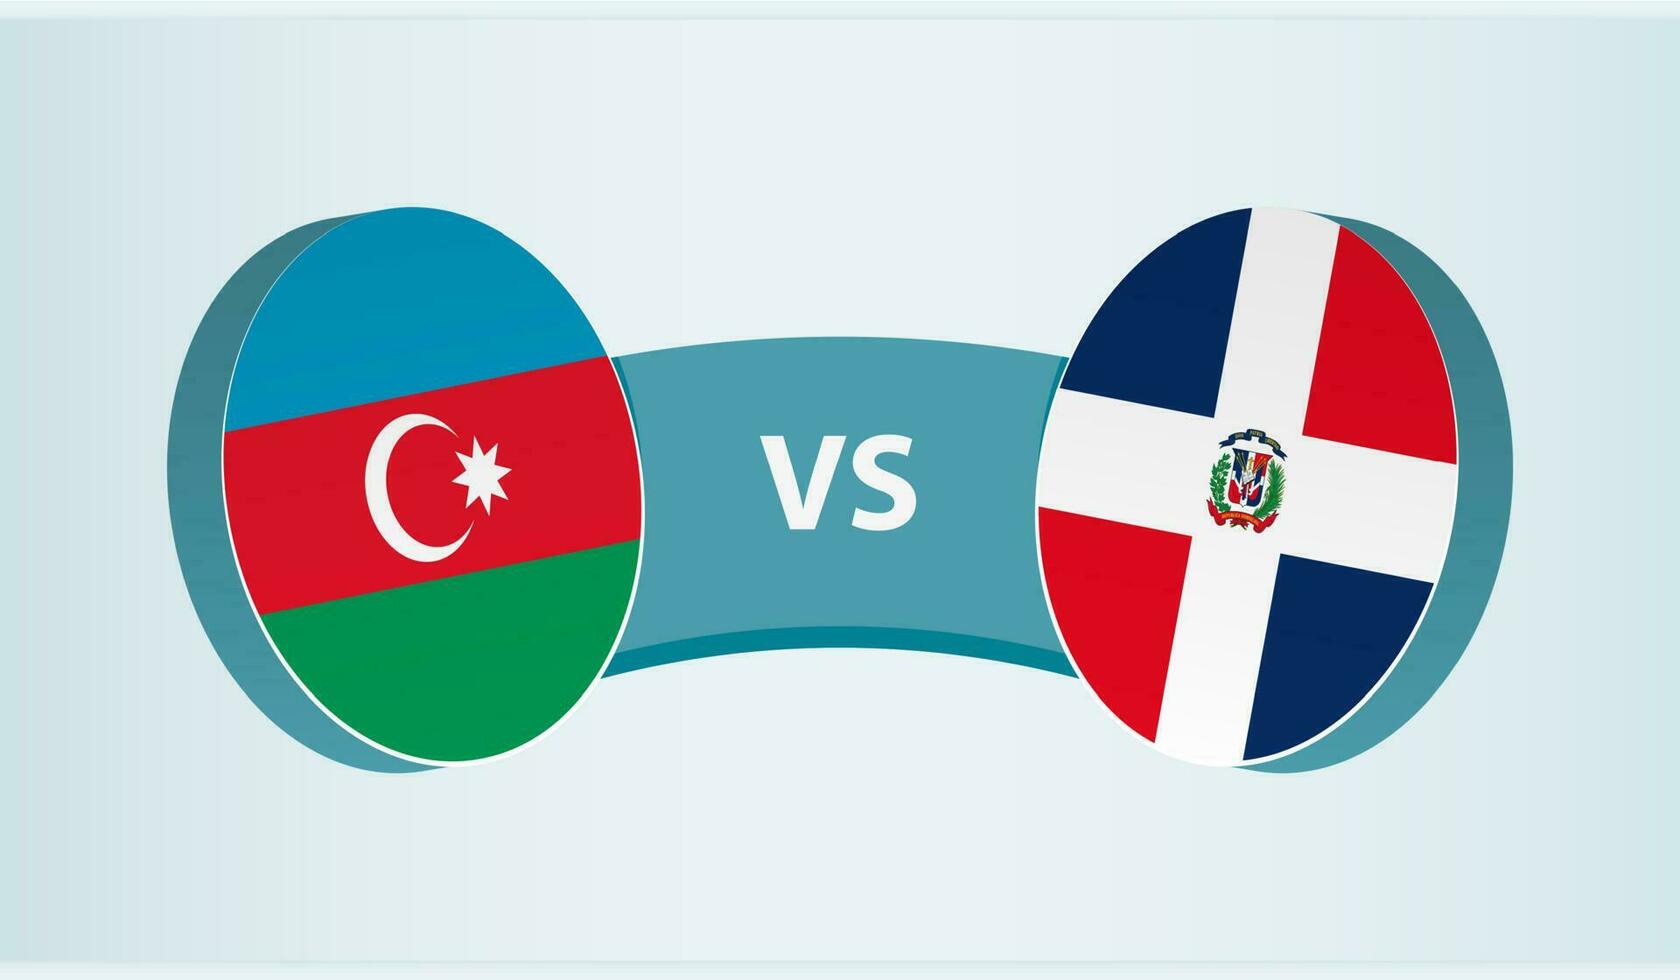 Azerbaijan versus Dominican Republic, team sports competition concept. vector